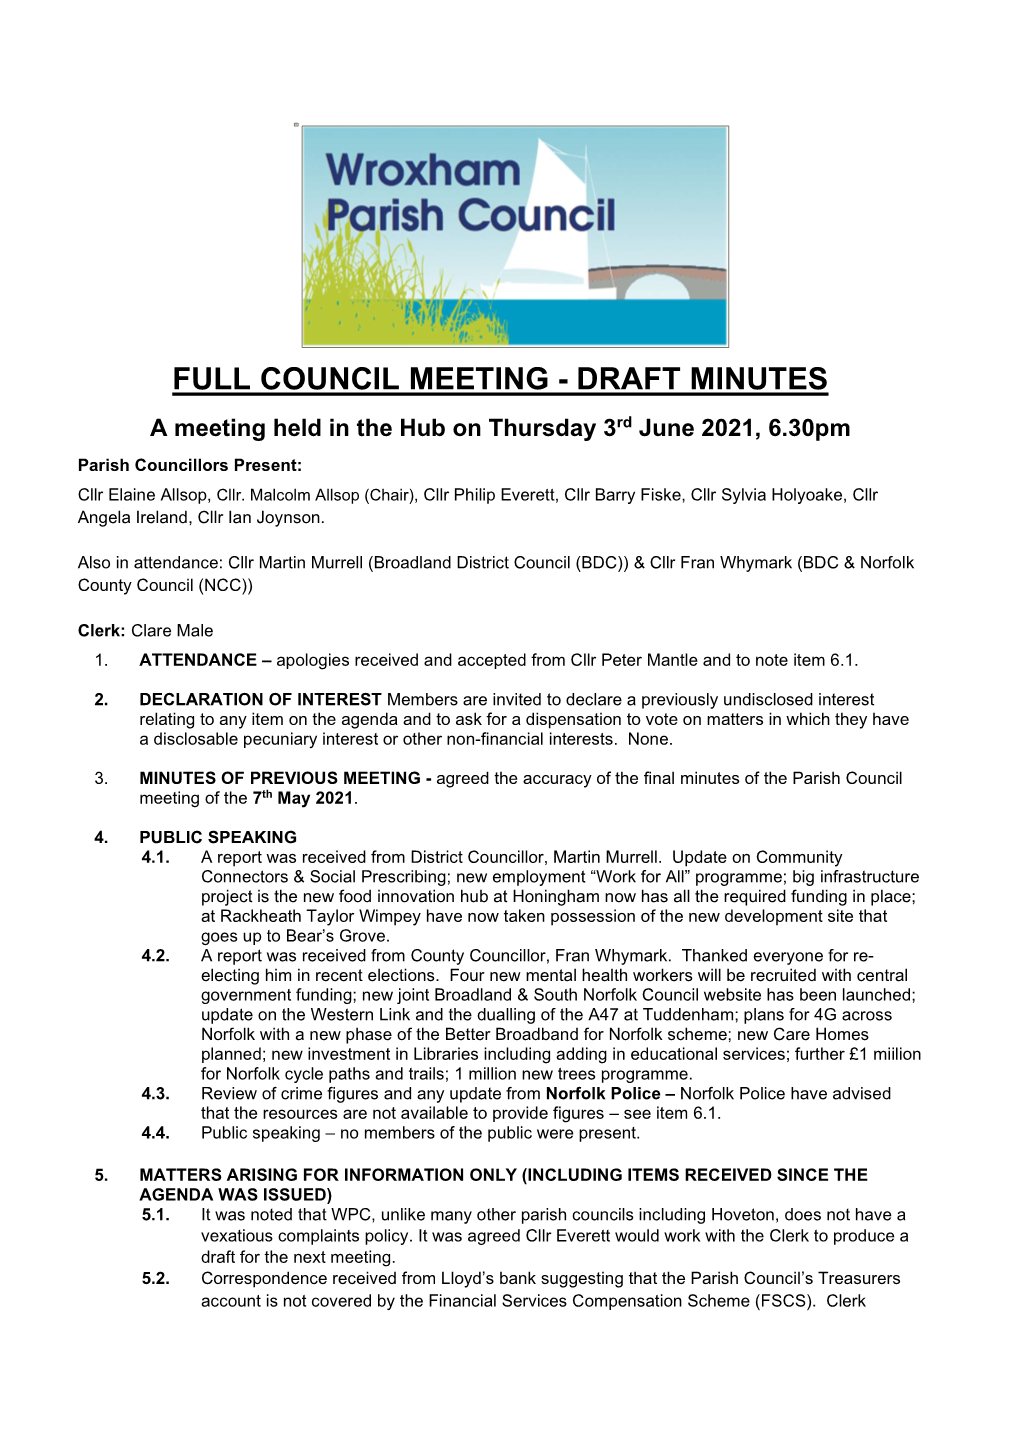 FULL COUNCIL MEETING - DRAFT MINUTES a Meeting Held in the Hub on Thursday 3Rd June 2021, 6.30Pm Parish Councillors Present: Cllr Elaine Allsop, Cllr